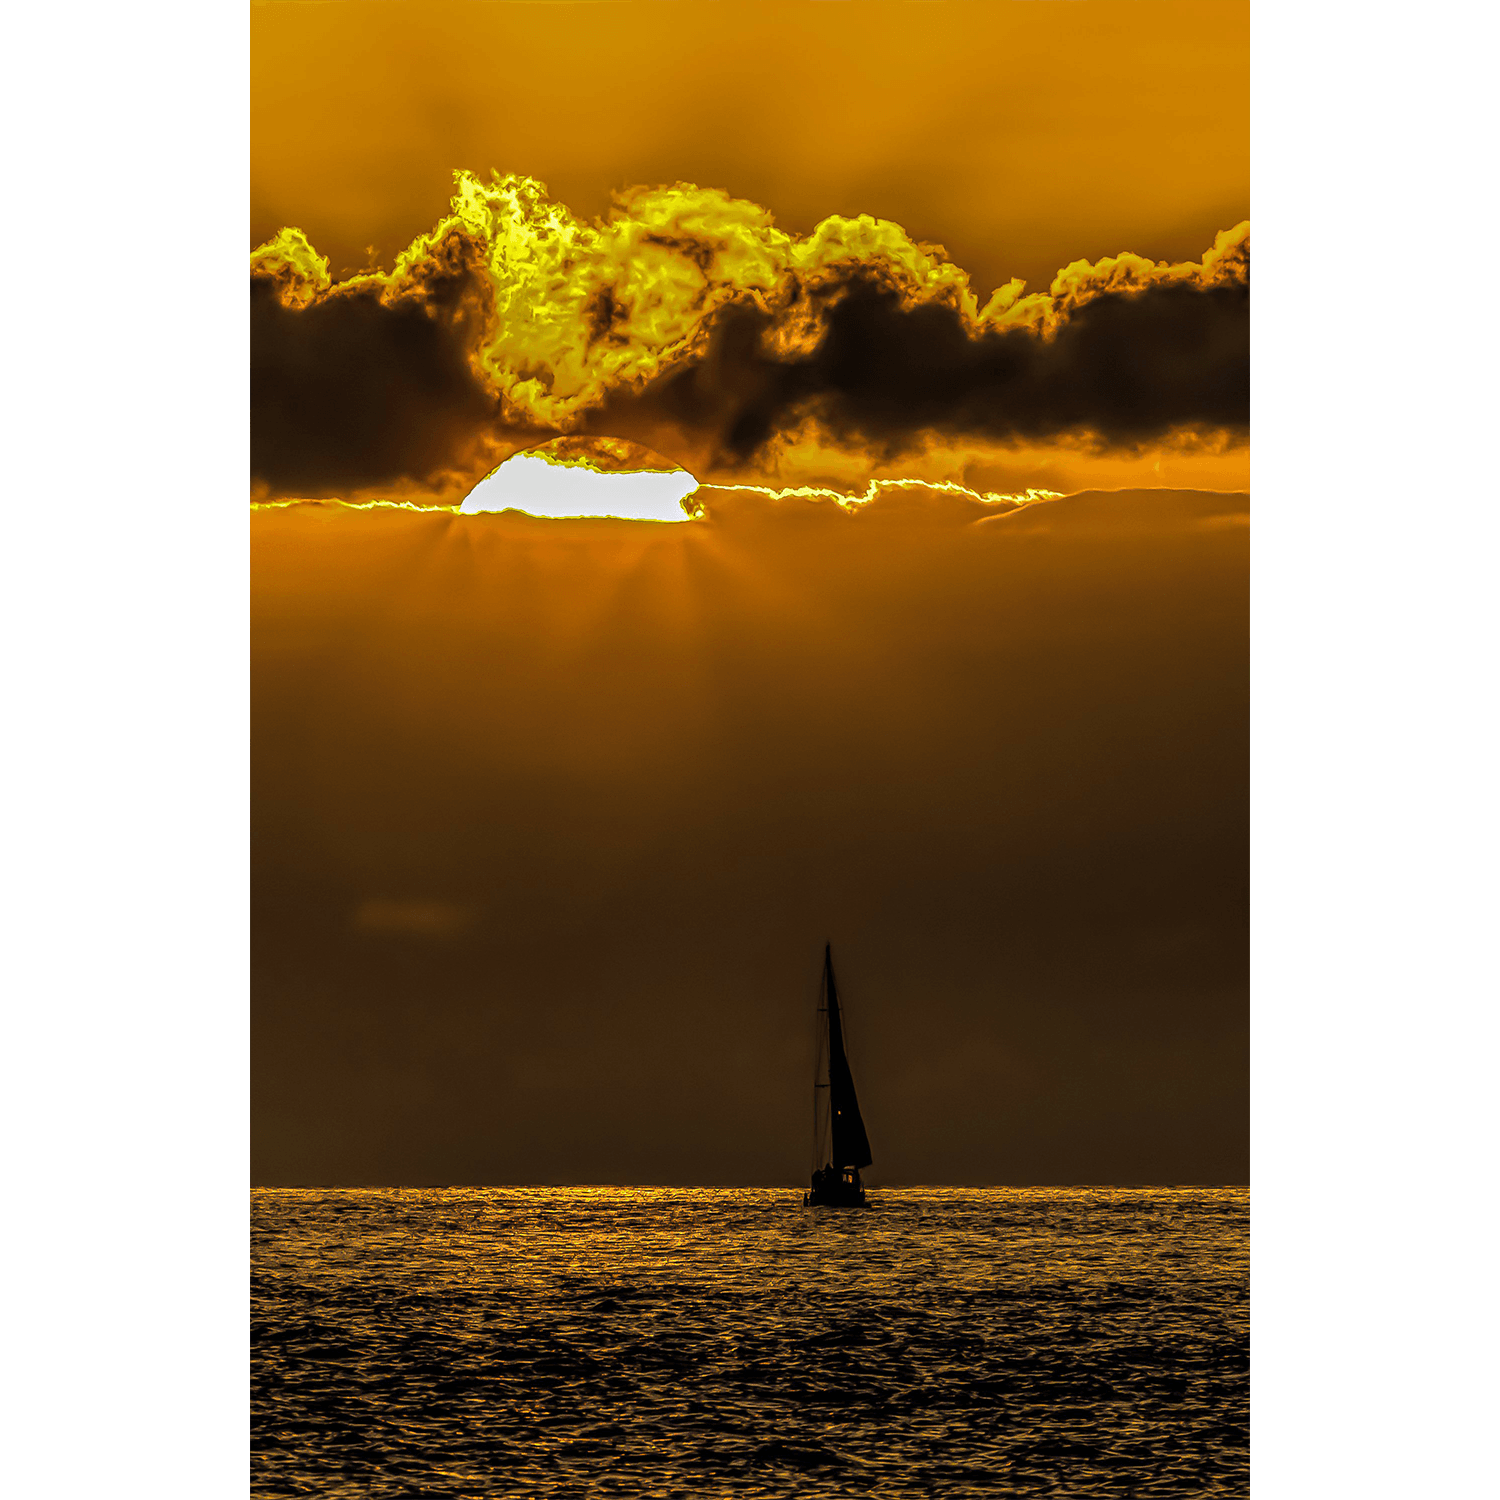 Sunset Sail I